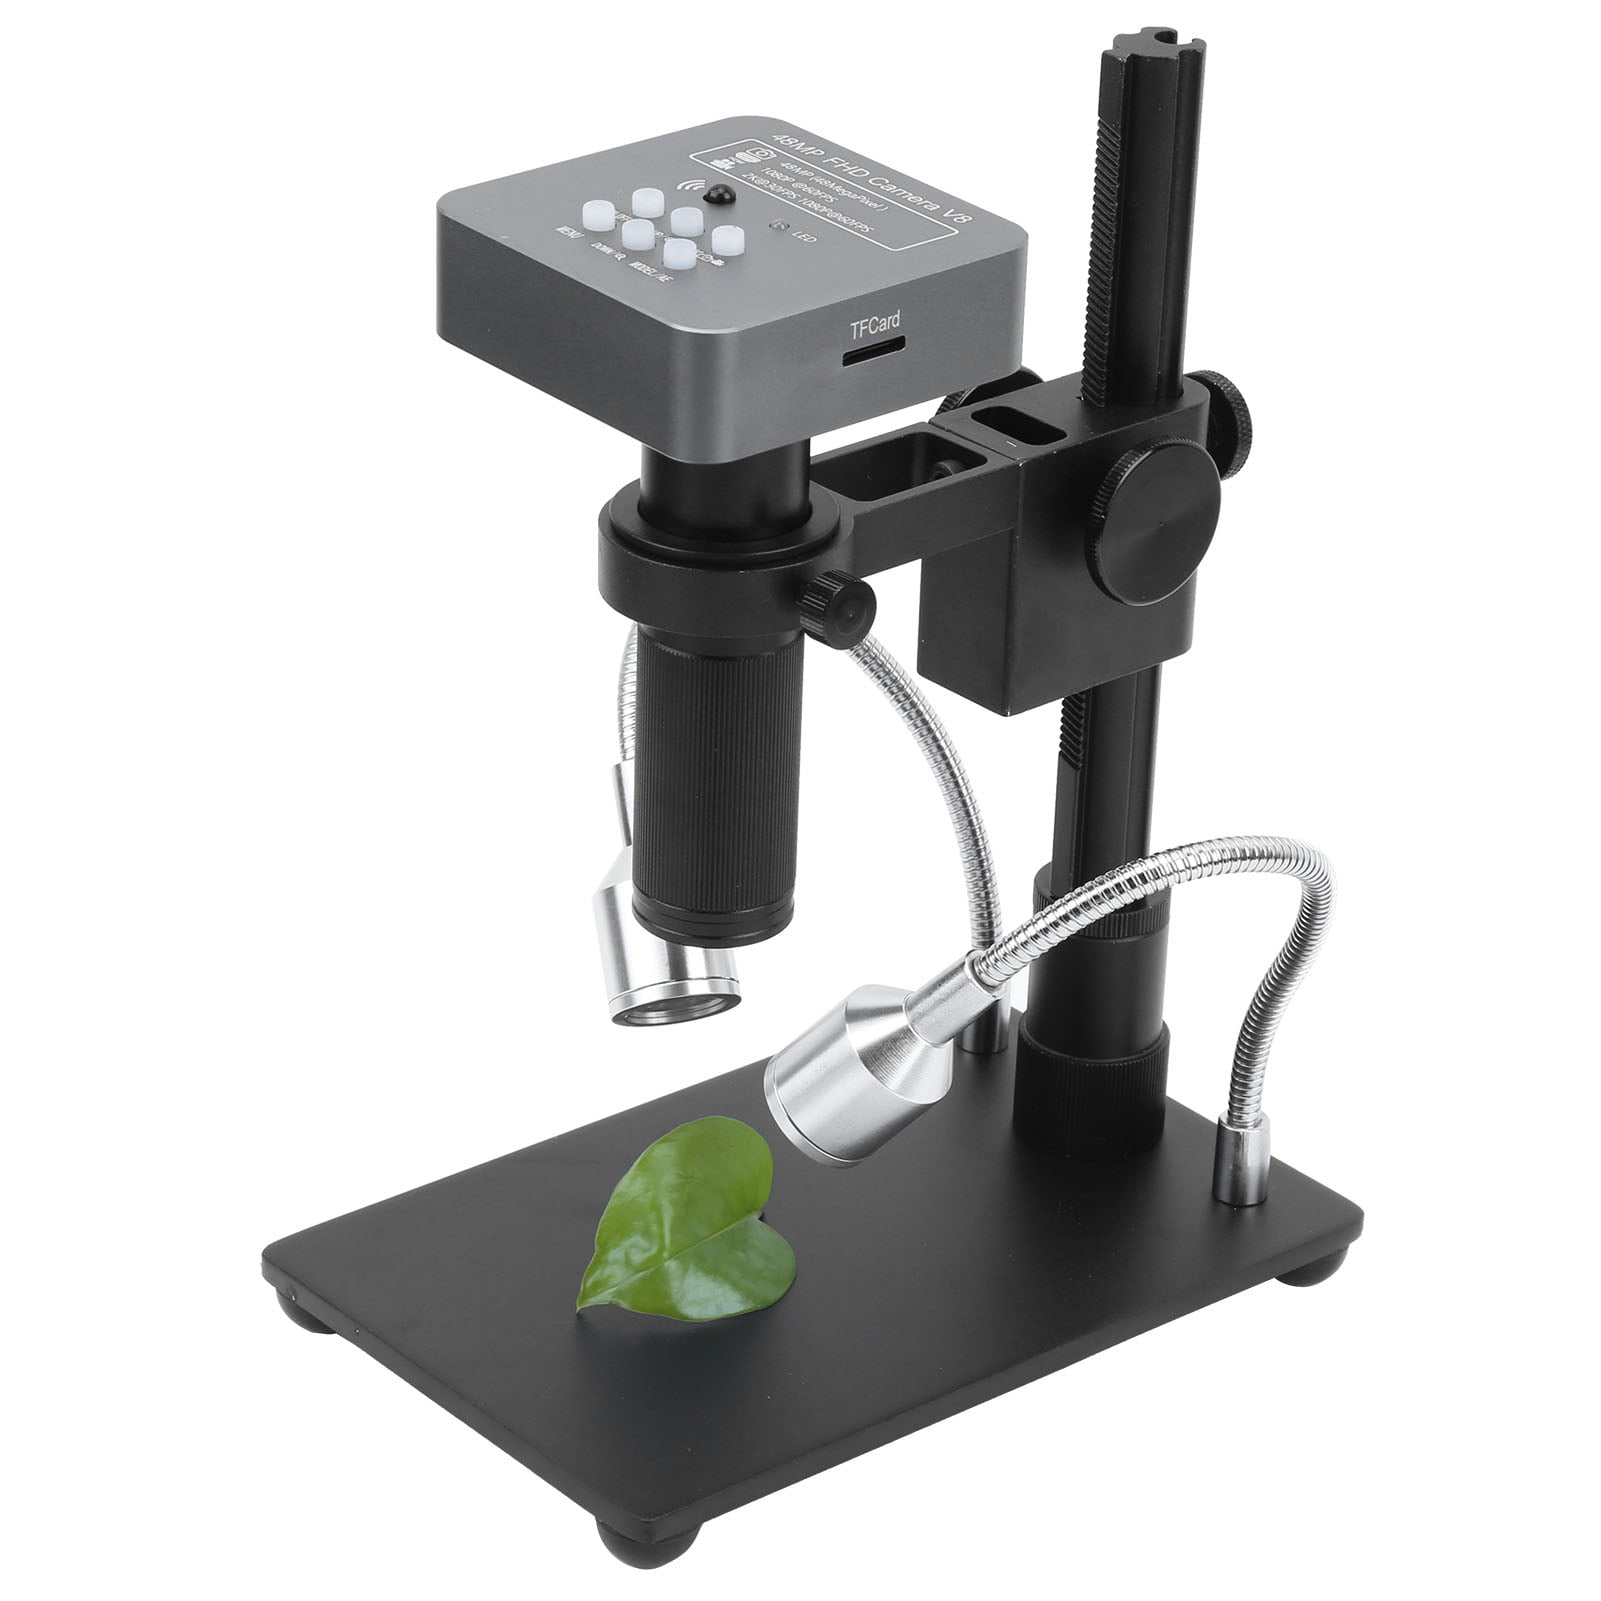 Romantic PresentIndustrial Microscope Camera Set U.S. regulations Phone Repair for Circuit Board Functional Reliable Widely Used Aluminum Alloy Digital Industrial Microscope Camera